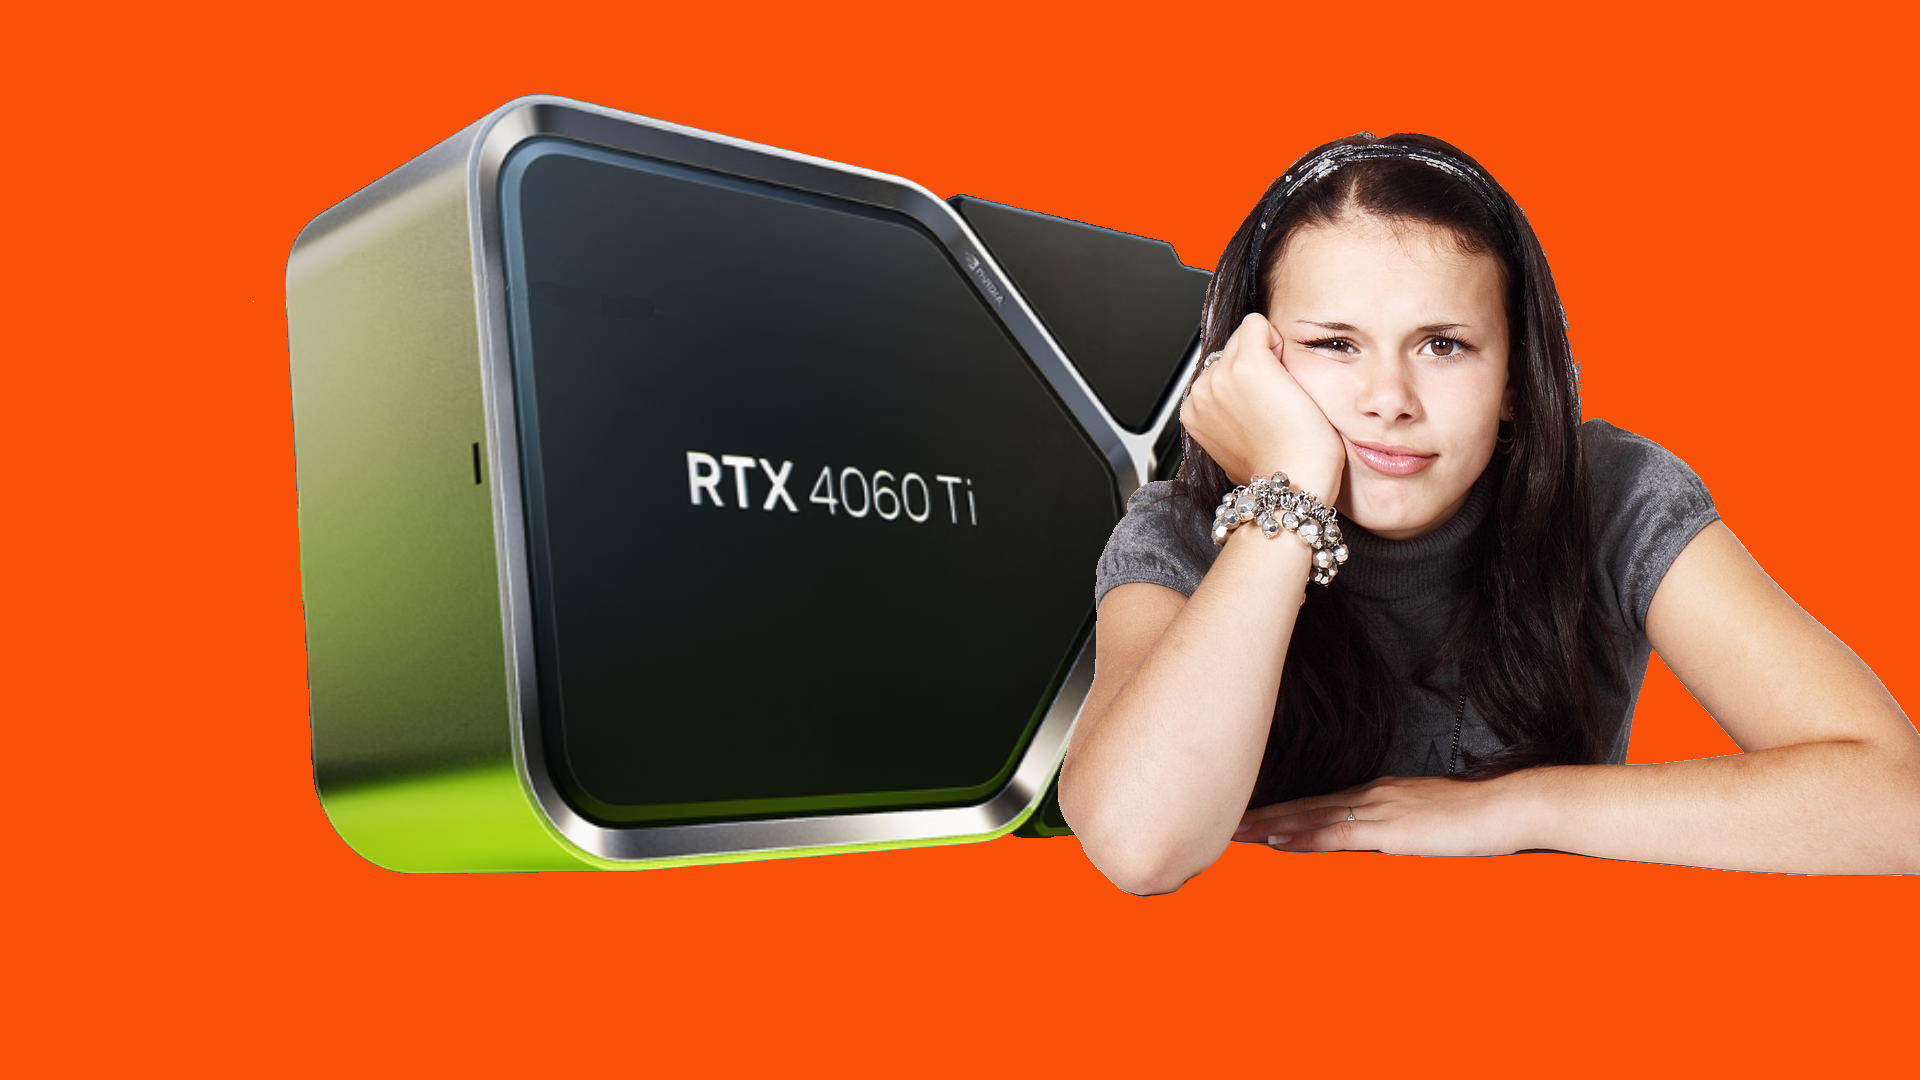 Nvidia GeForce RTX 4060 Ti 16GB price drops below MSRP already